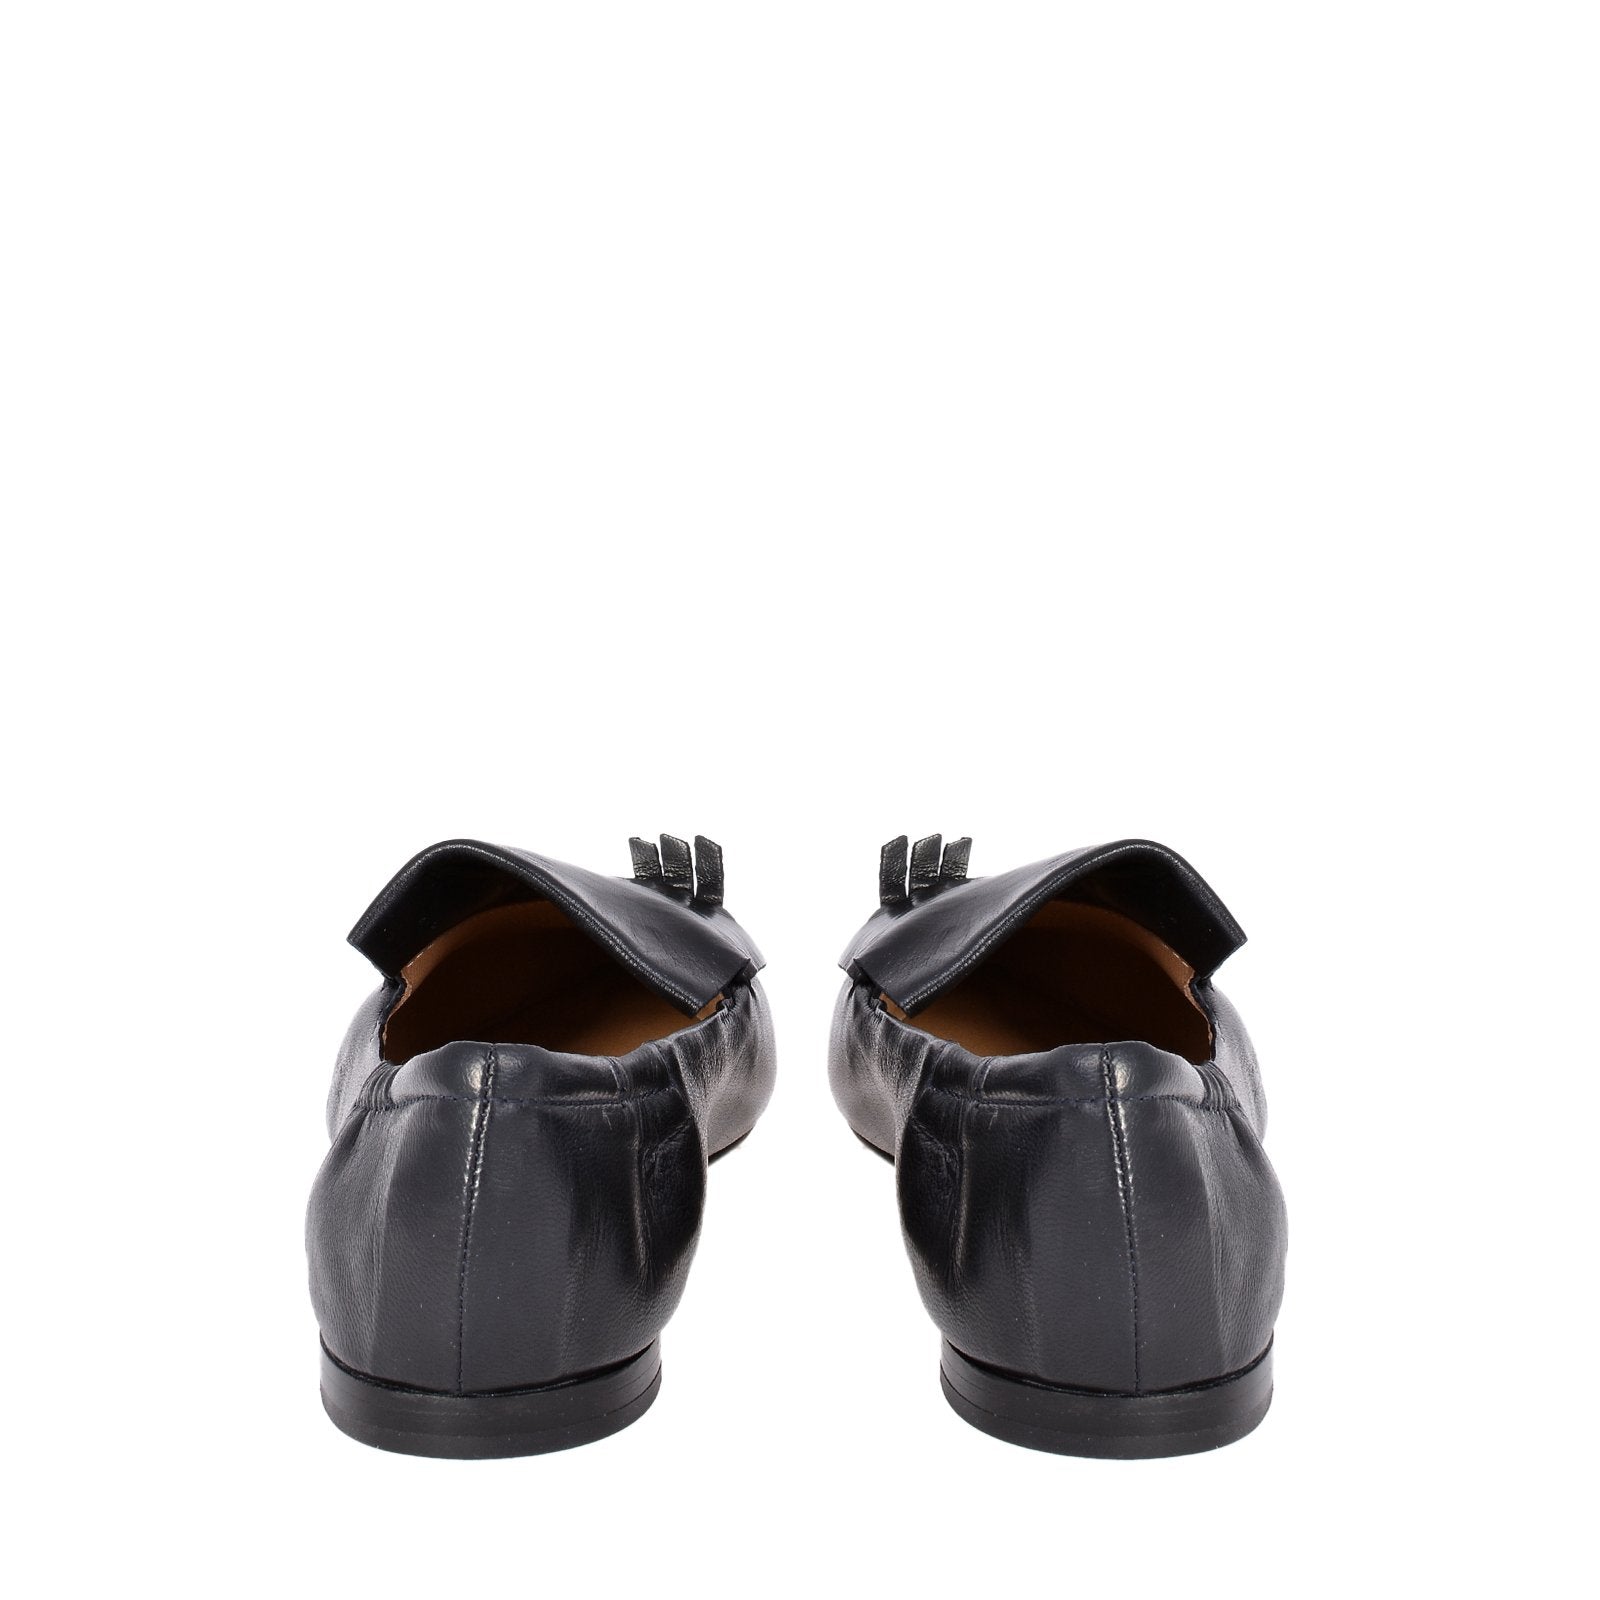 Grace Black Navy Leather Loafers Flats 1744B - 4